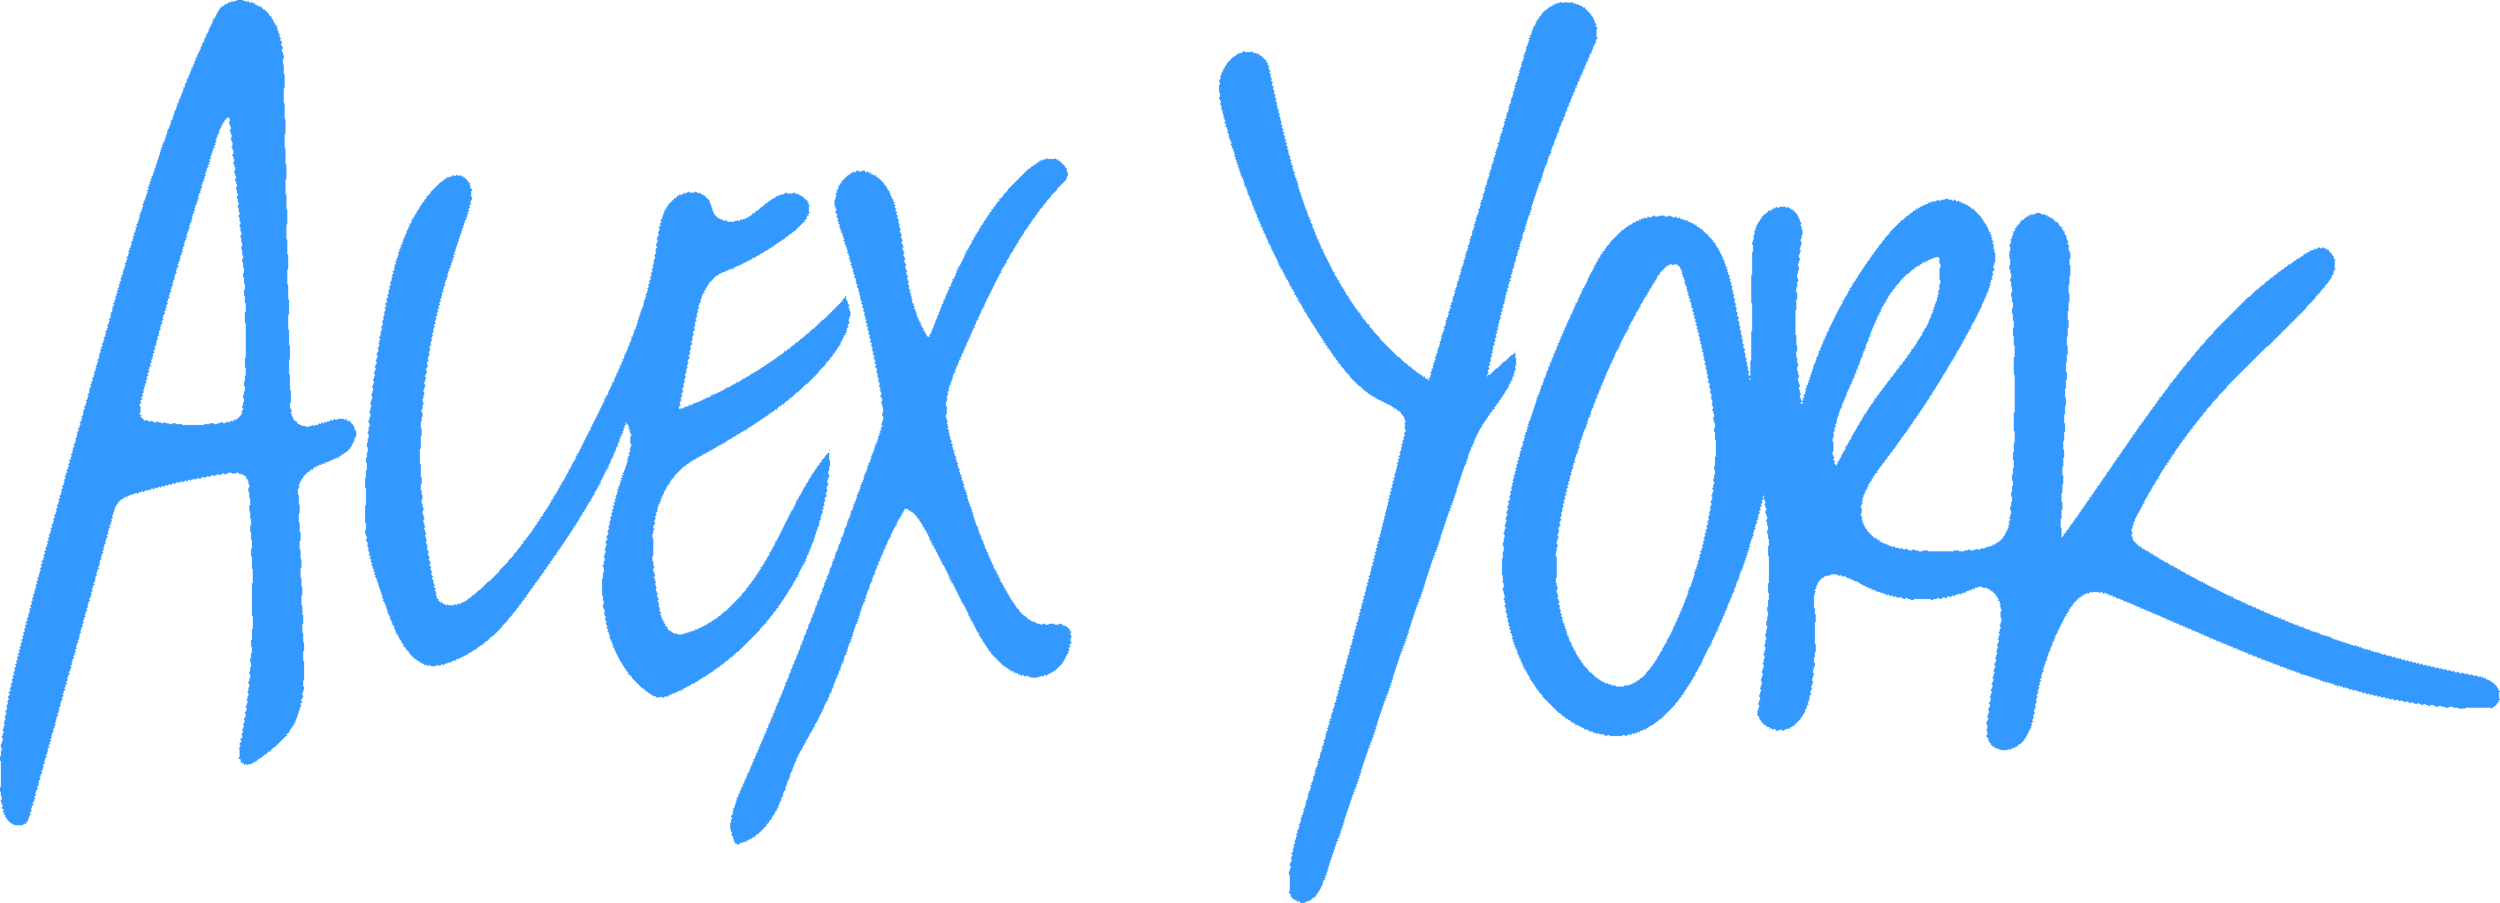 Alex York - Official Site | 公式サイト